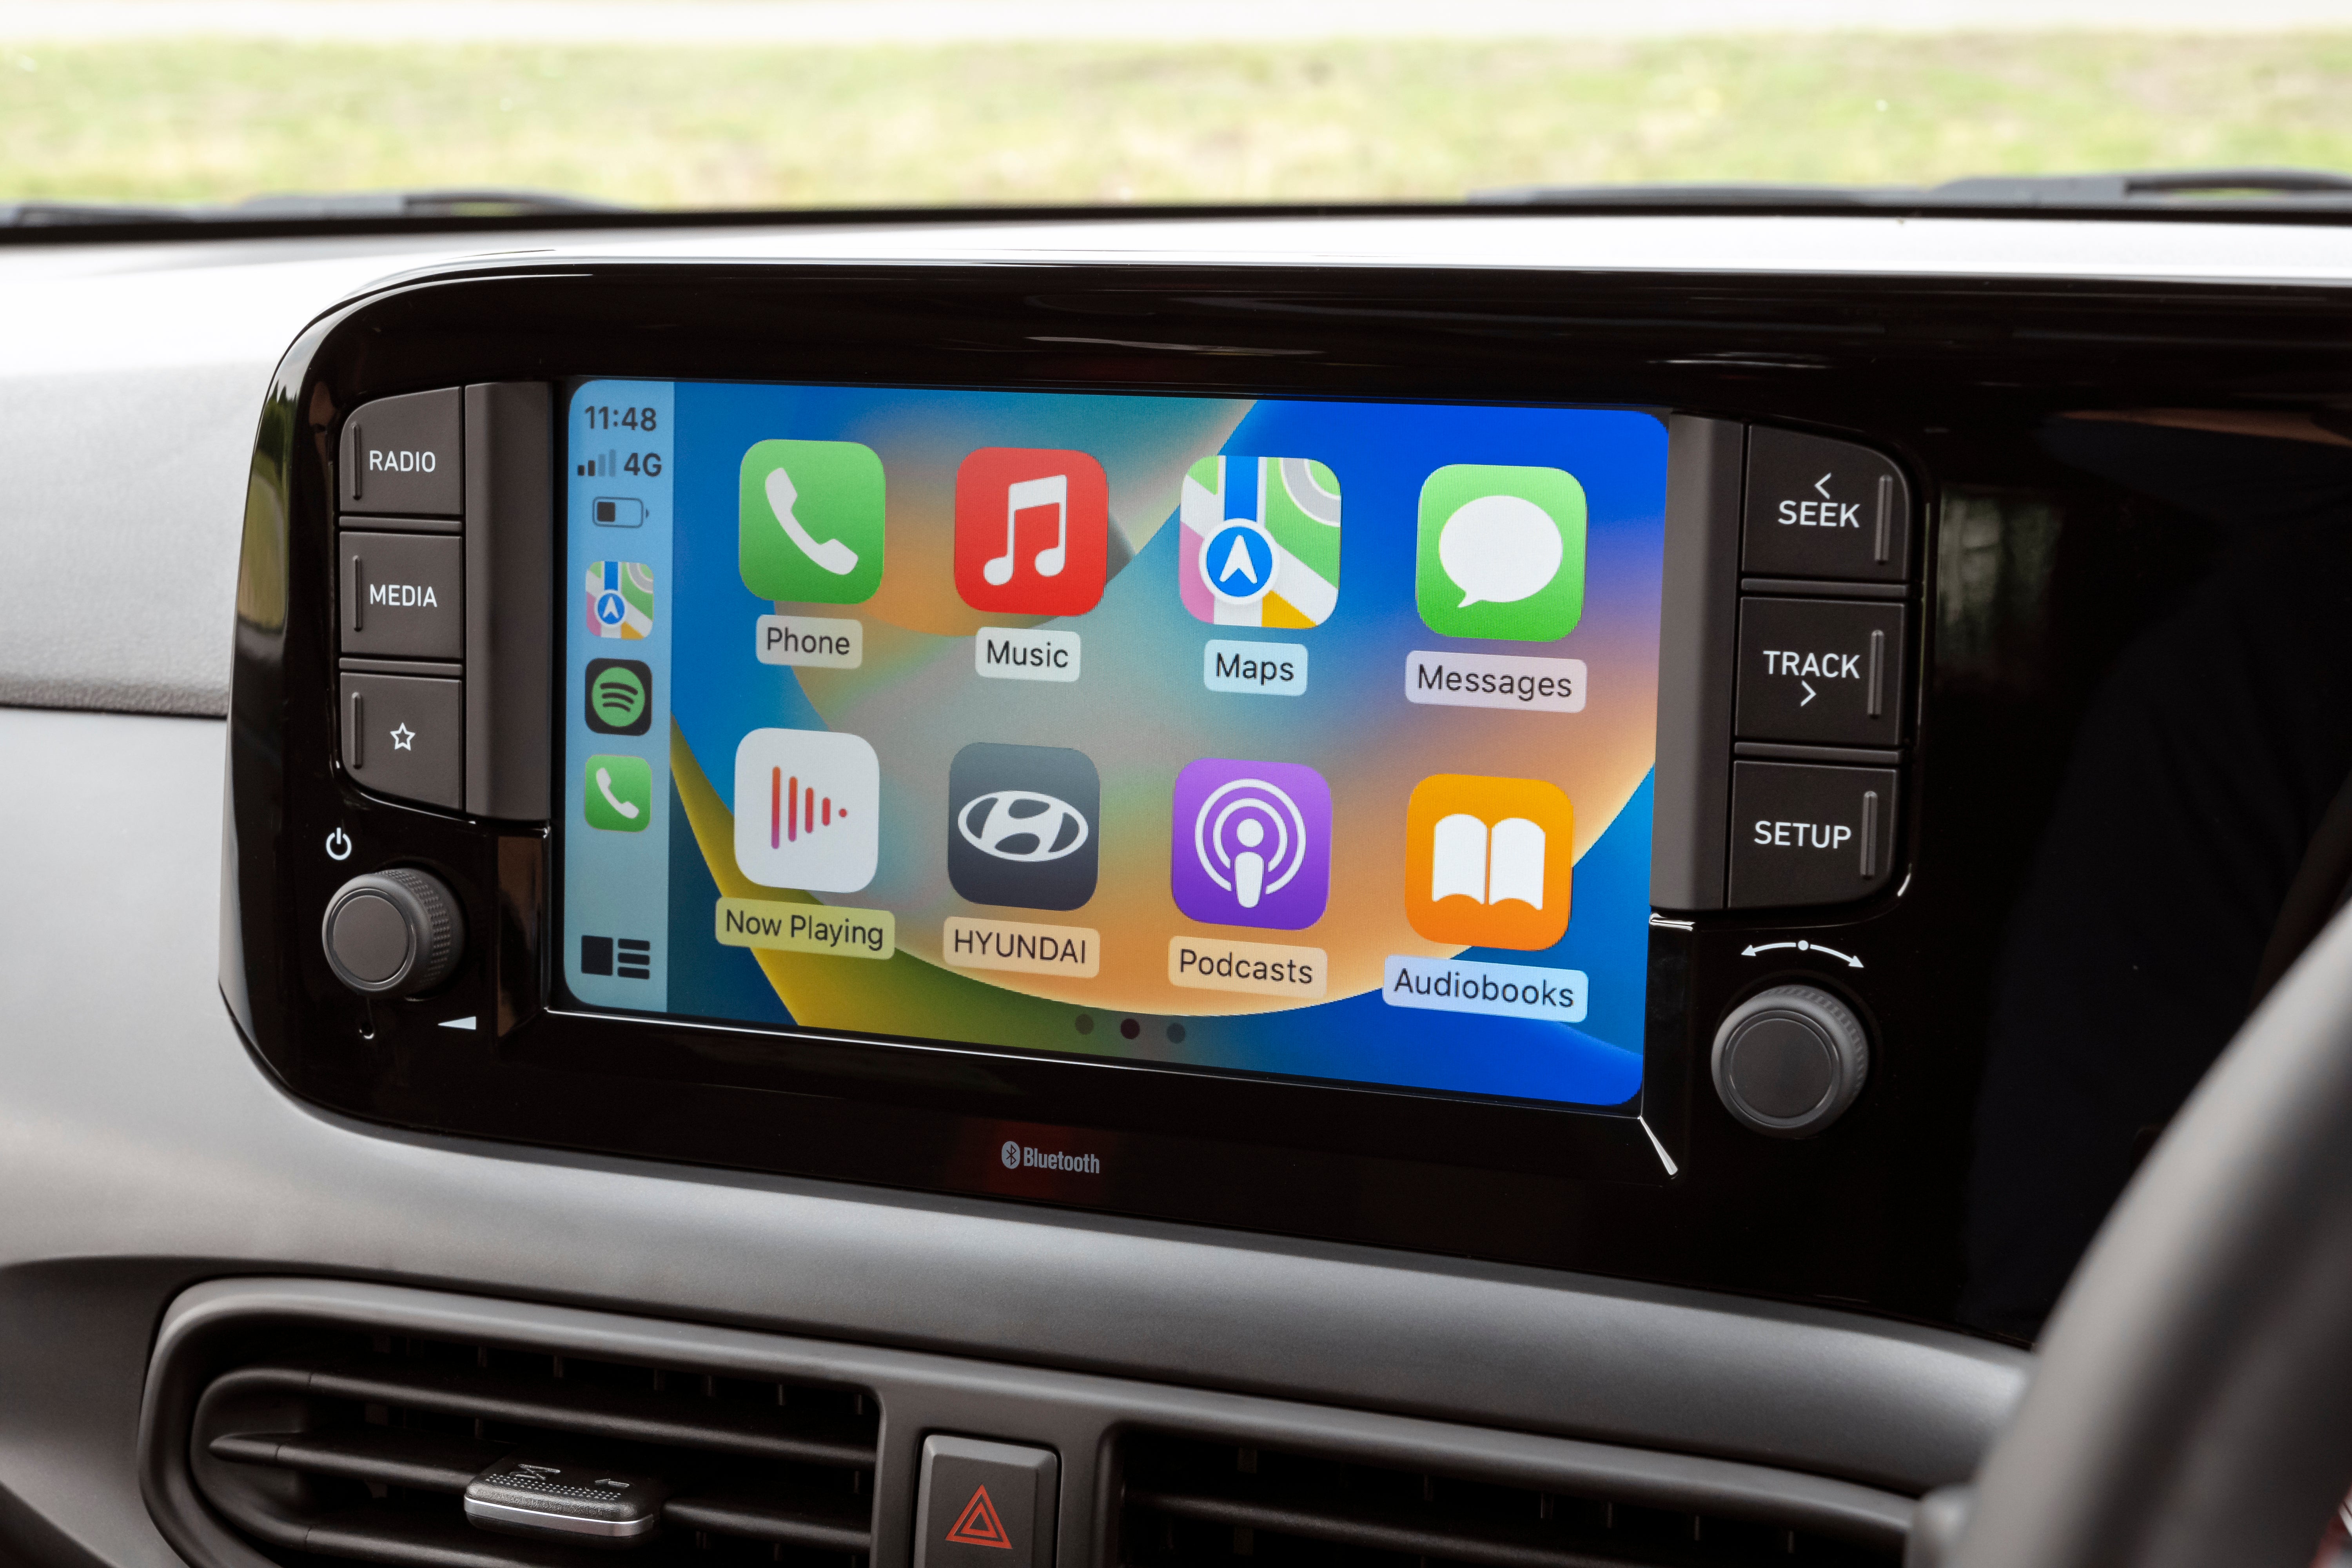 Hyundai i10 infotainment screen with Apple CarPlay